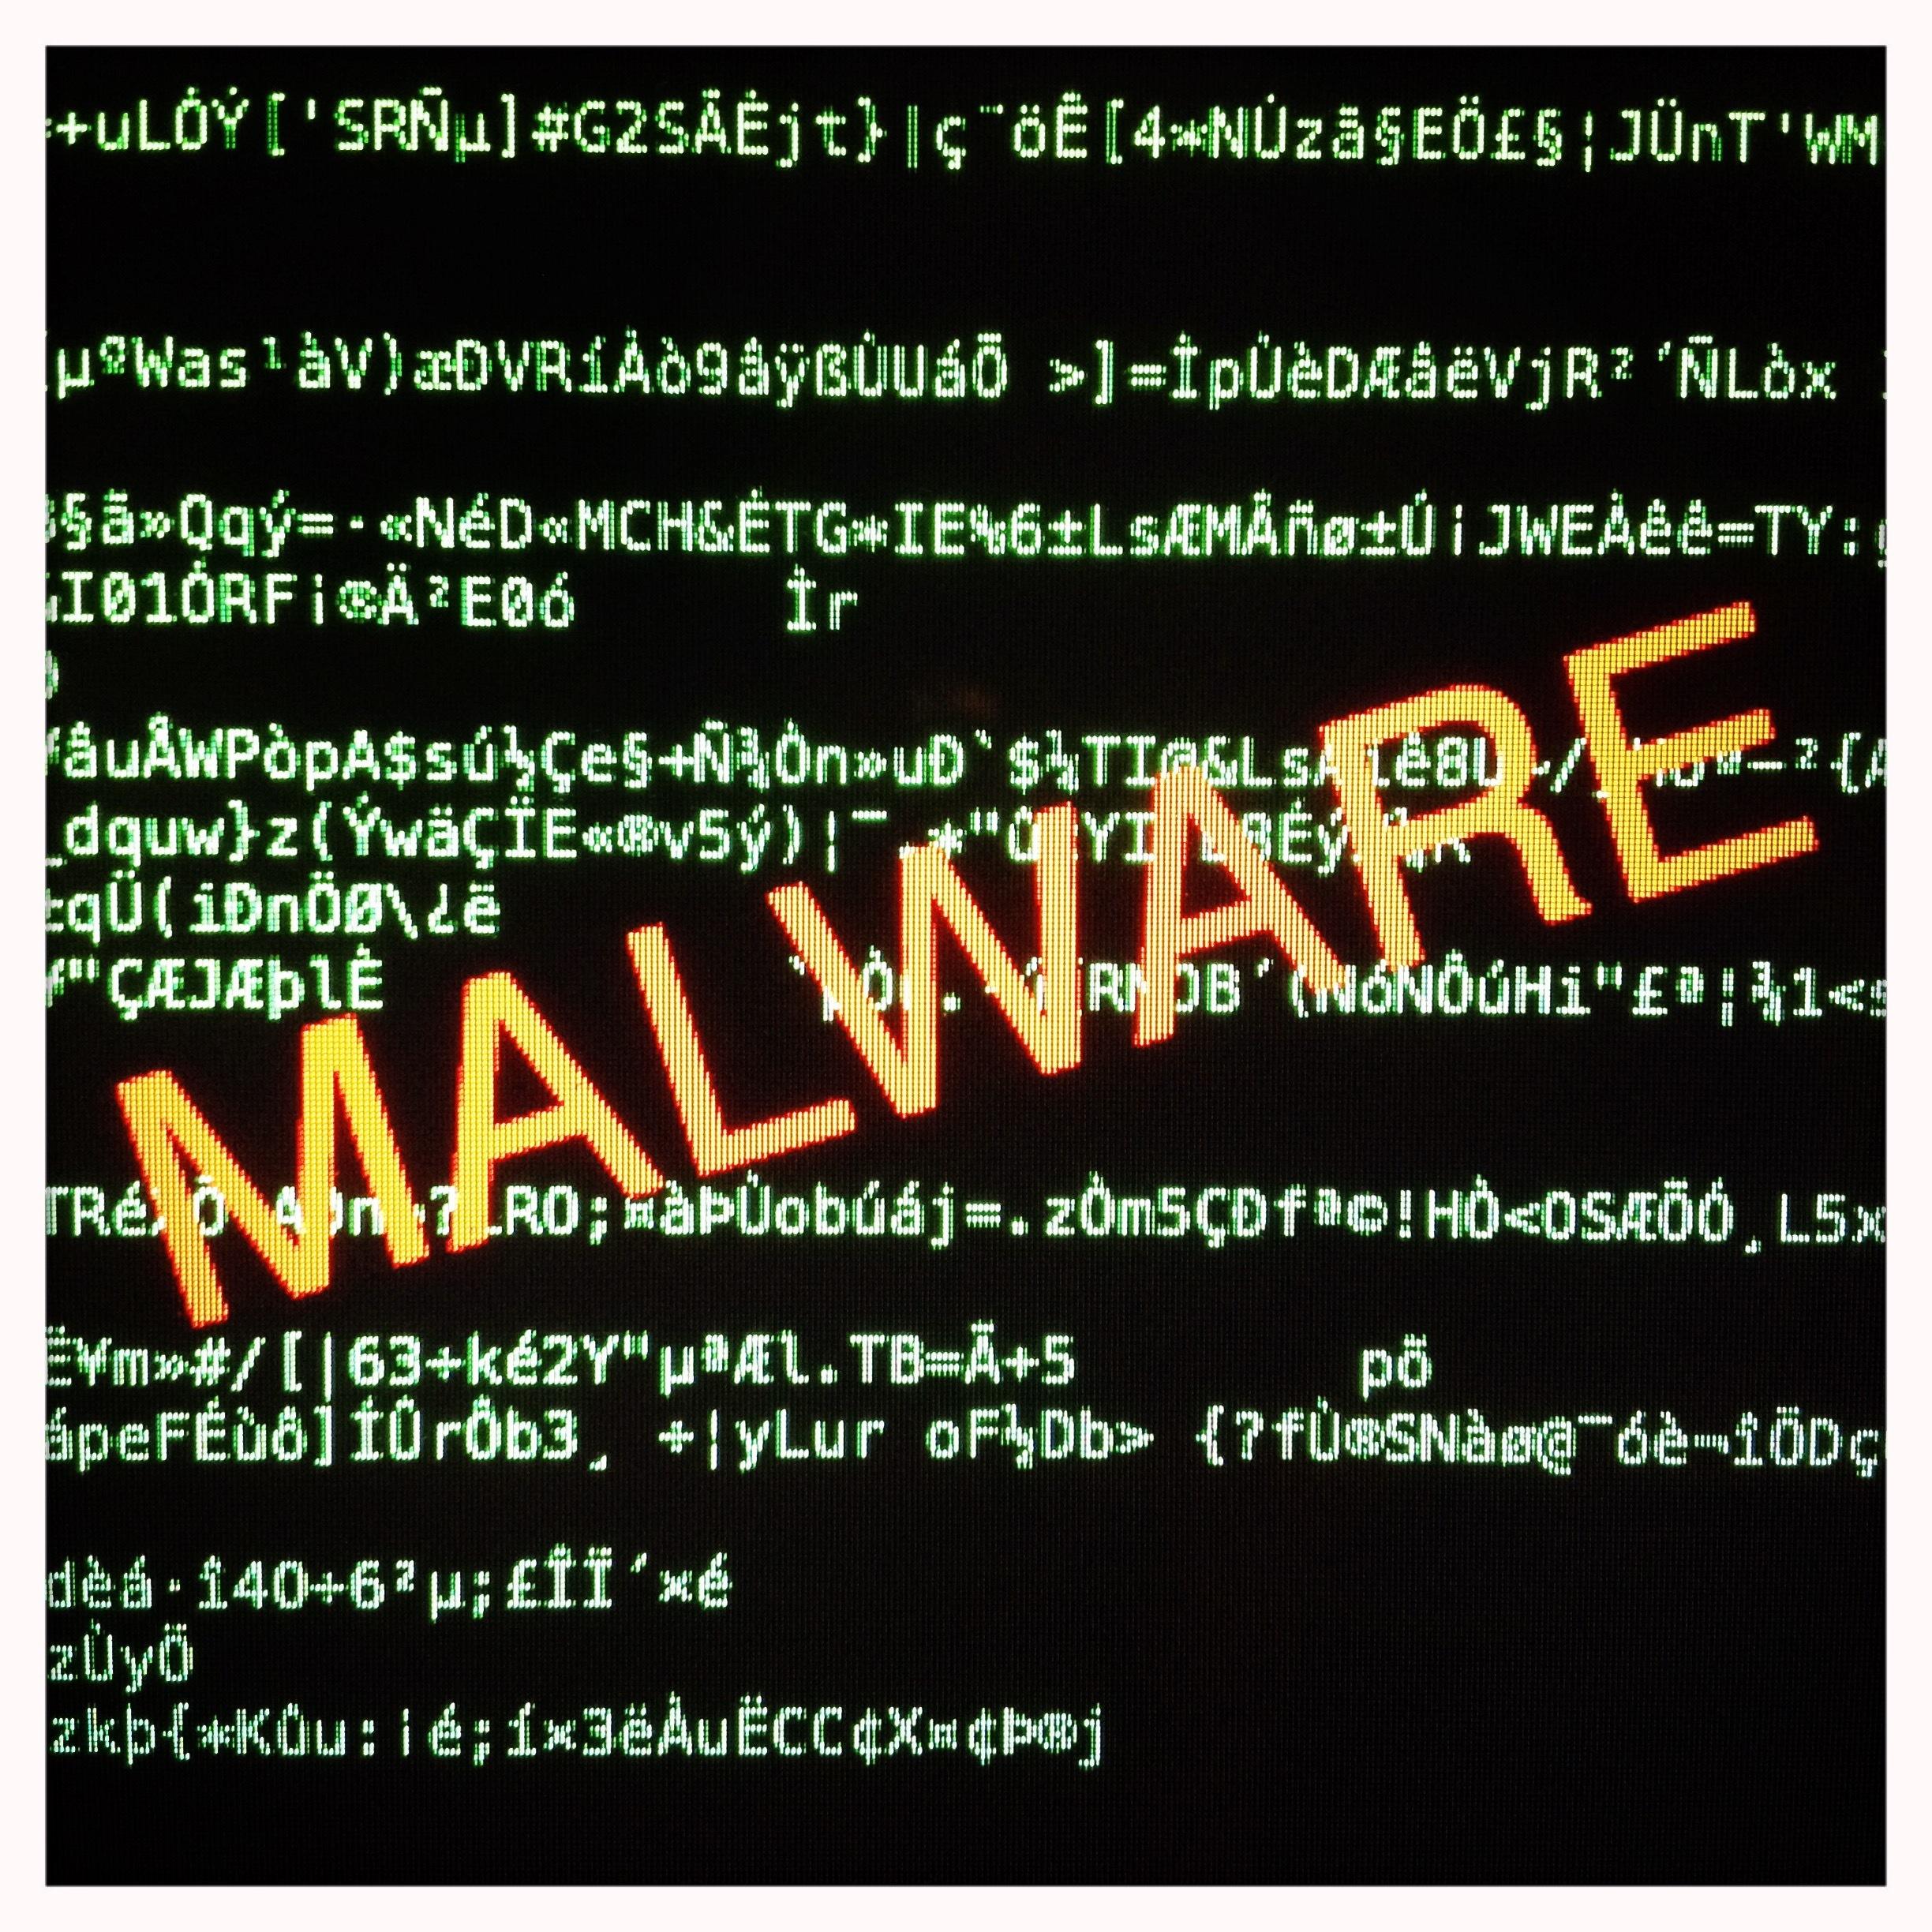 Truebot Malware Variants Abound, According to CISA Advisory – Source: www.darkreading.com